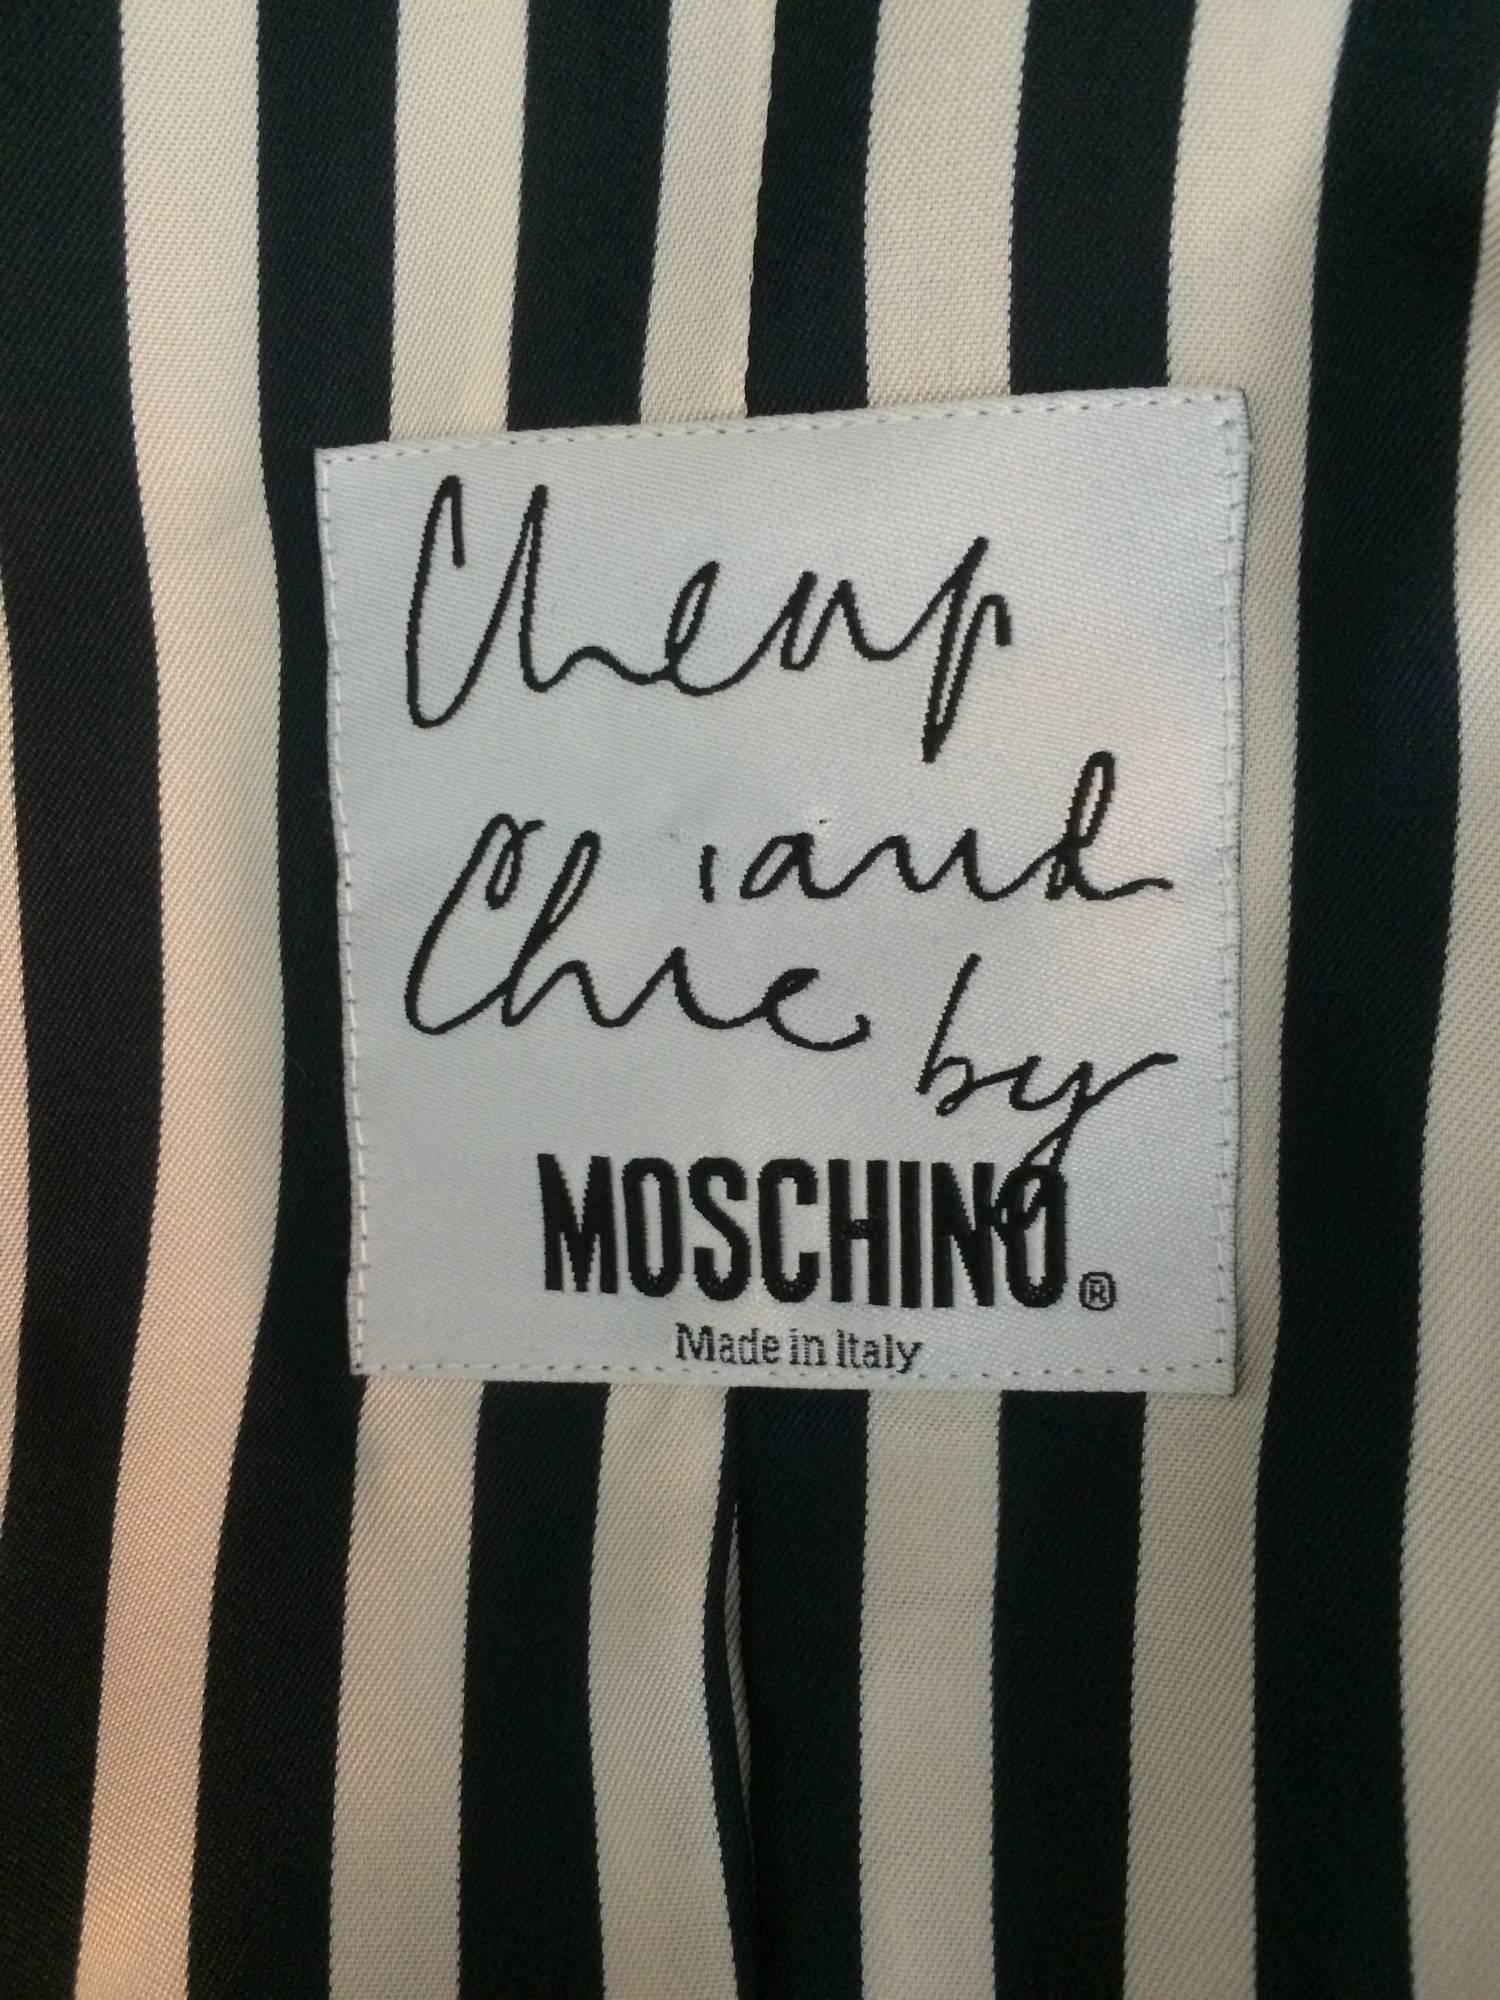 Moschino Cheap & Chic lucky 13 chili pepper horseshoe jacket 1980s size 8 5